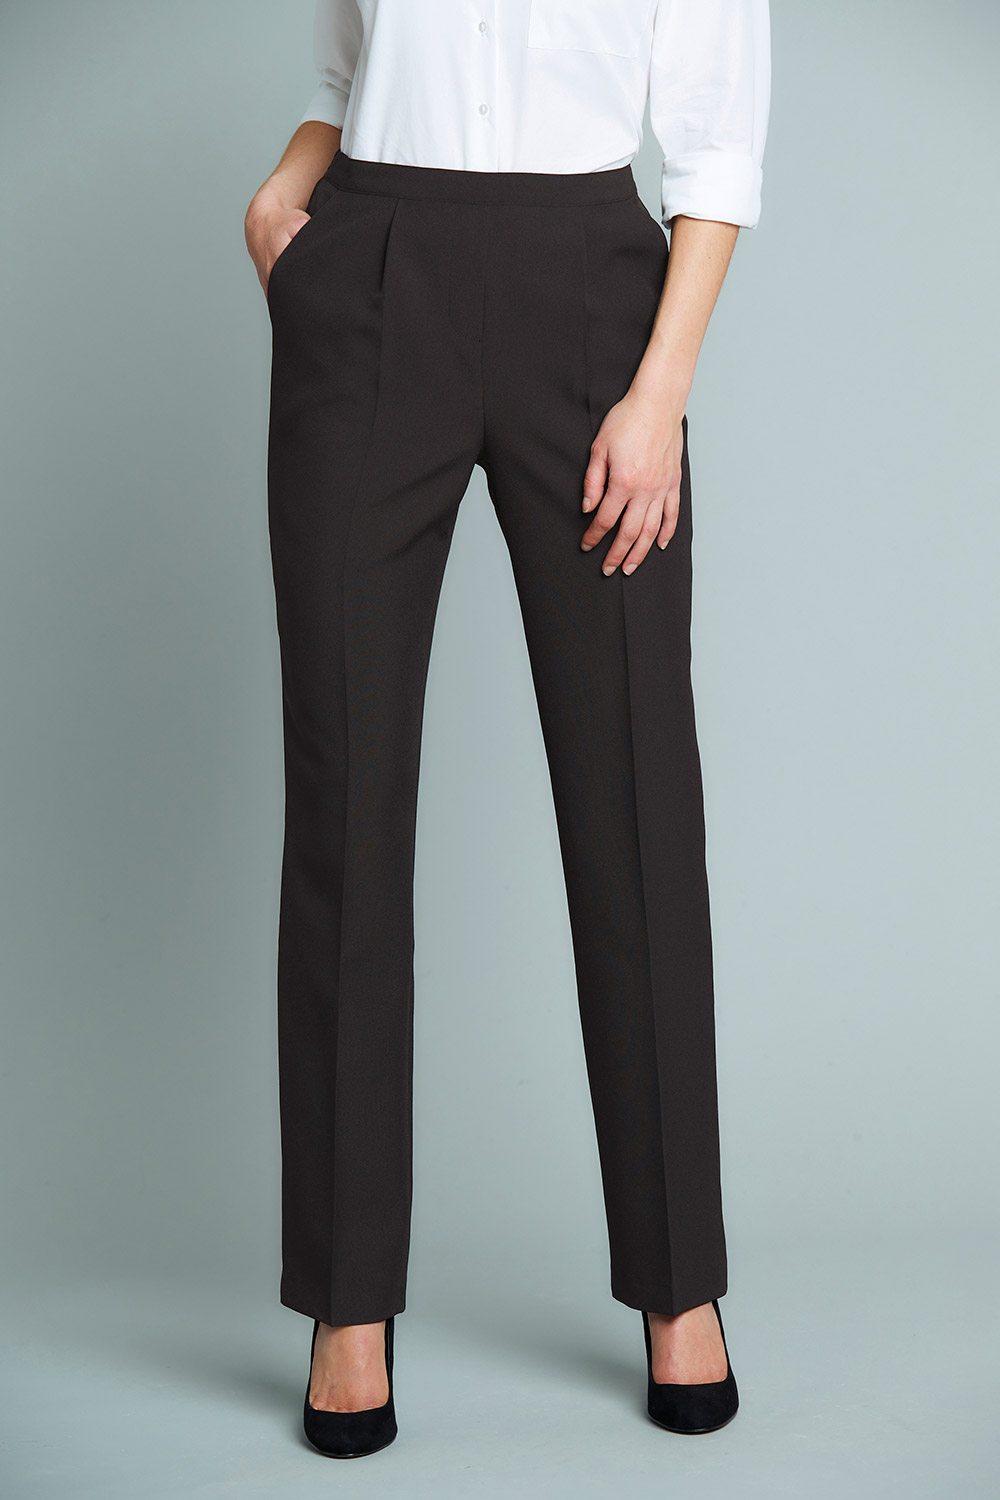 LADIES SMART BLACK Trousers  FF Tesco Size 12 Reg Fit 150  PicClick  UK